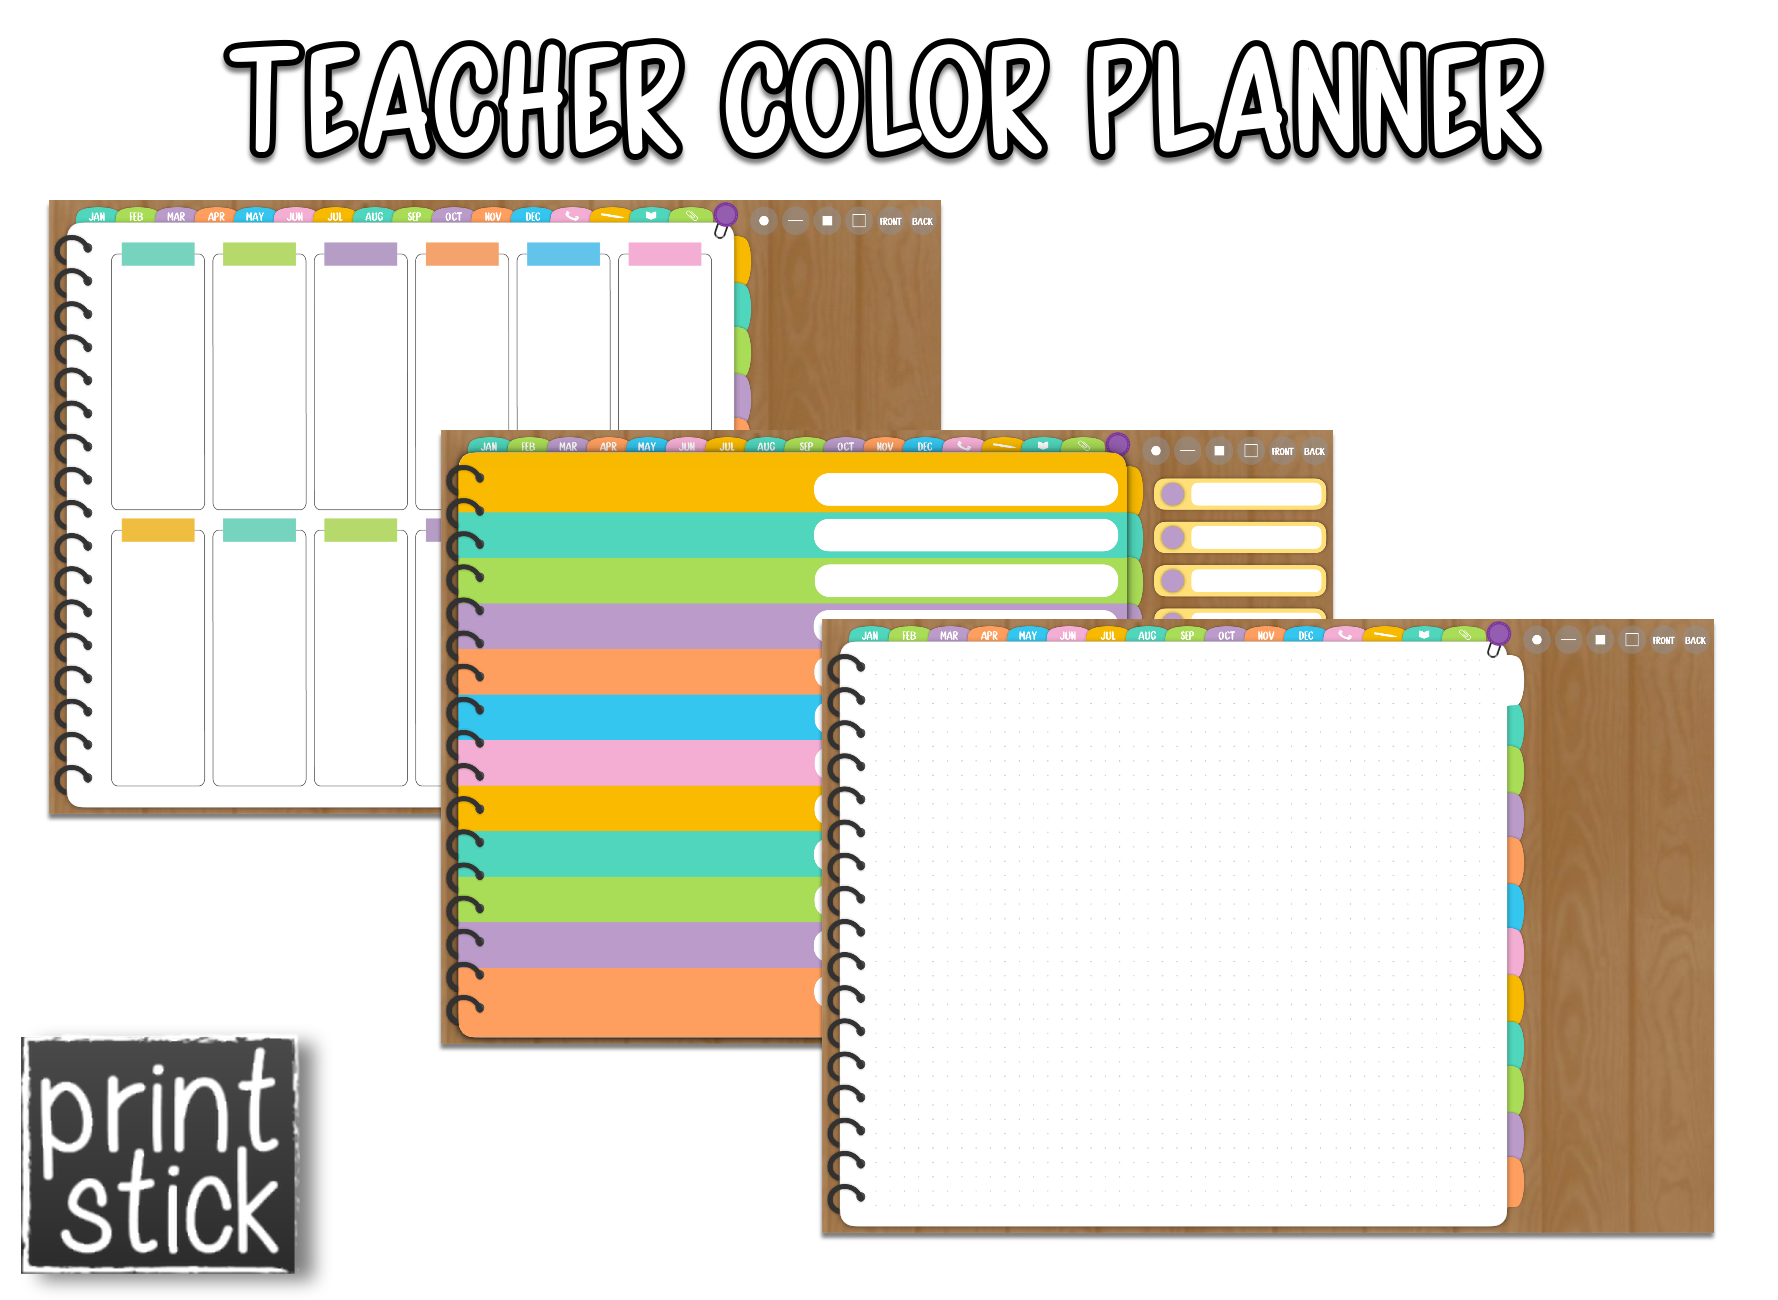 Teacher Color Planner - Print Stick